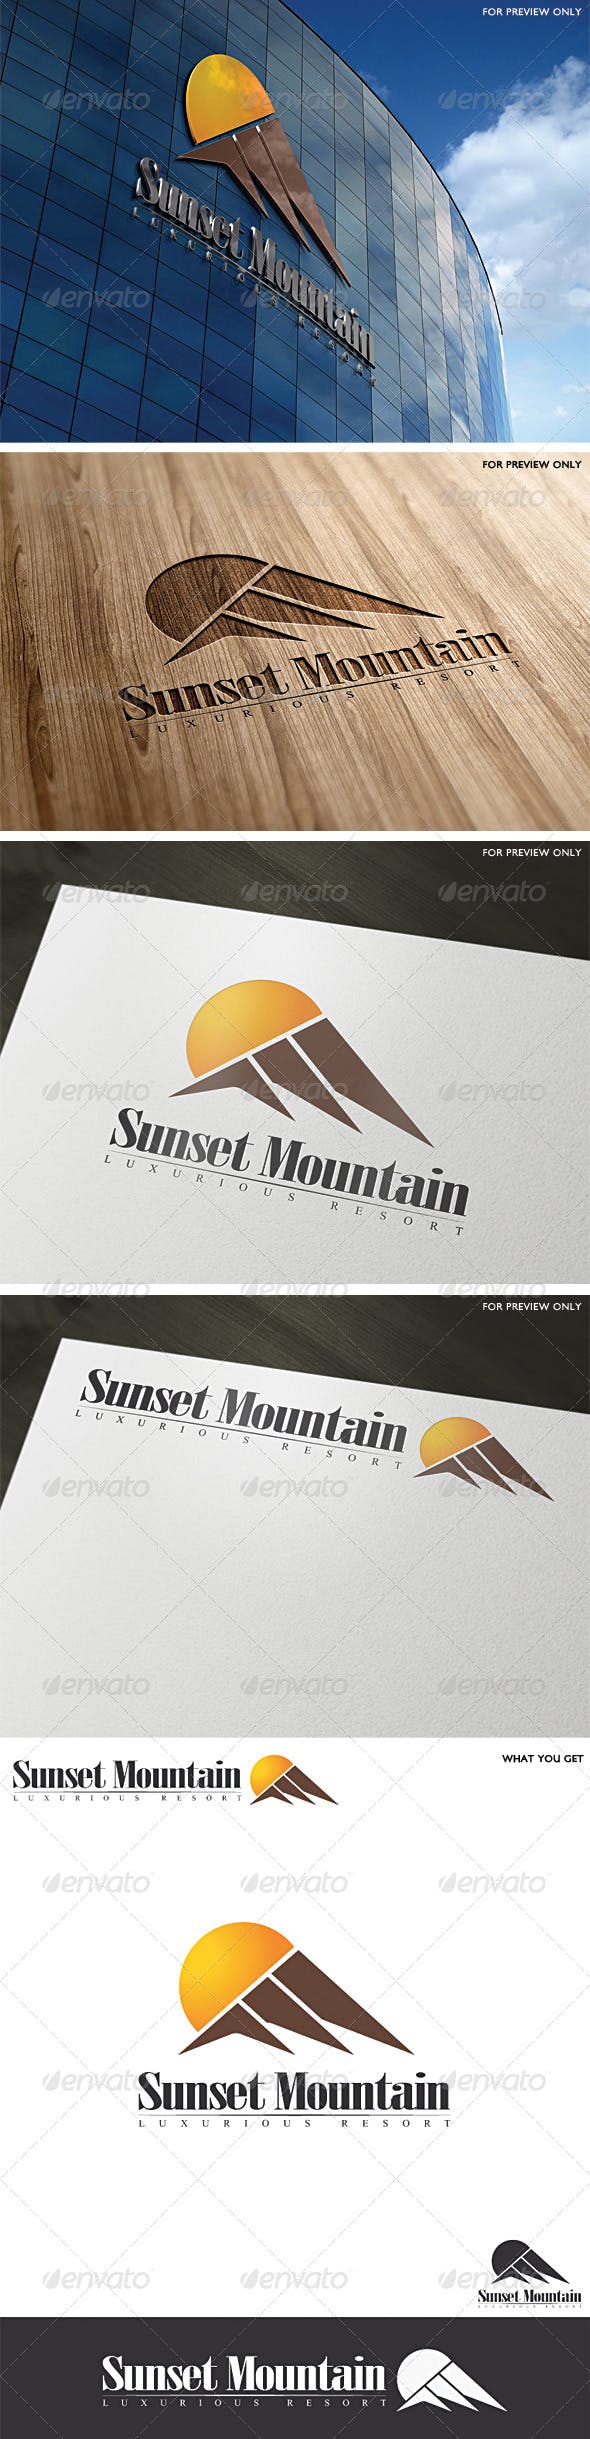 Sunset Mountain Logo - Sunset Mountain Resort Logo Template